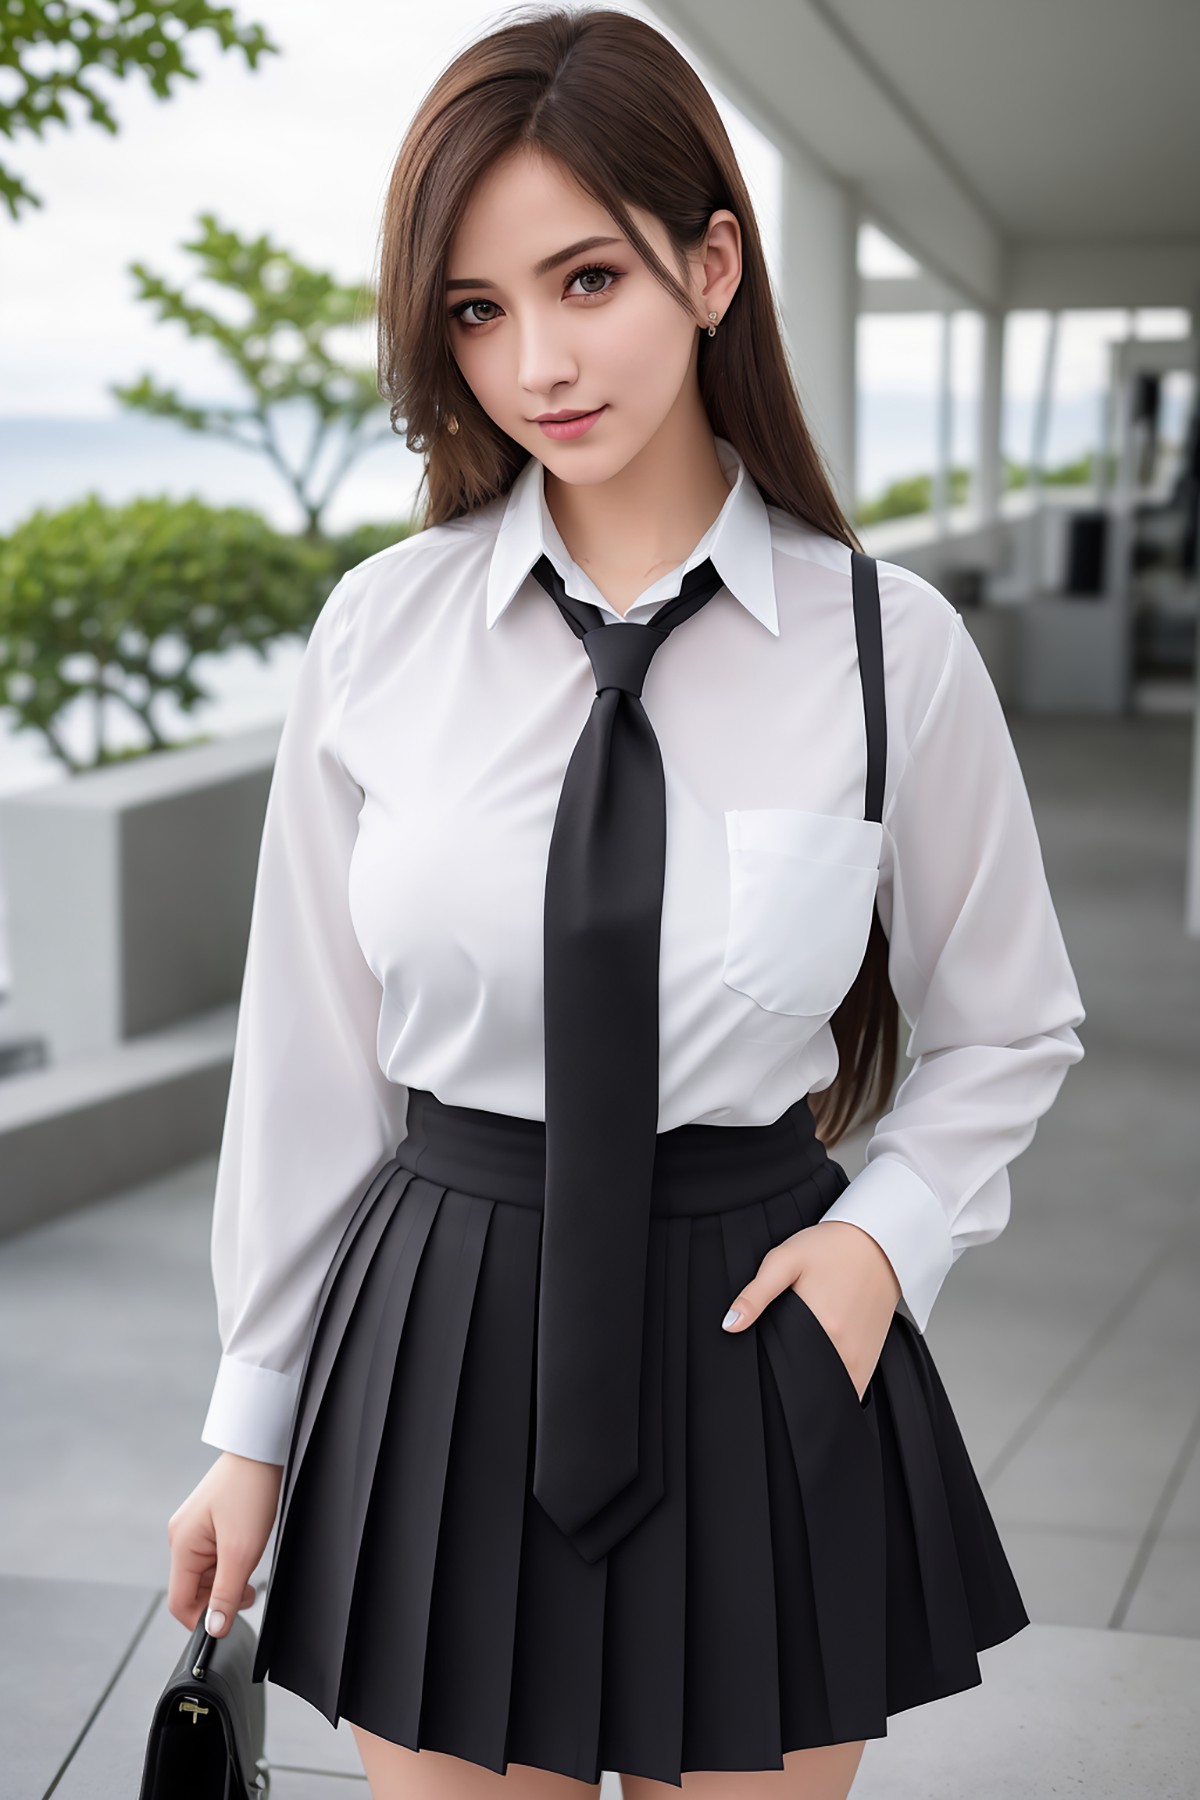 AIModel Vol 133 Sexy White Shirt With Black Short Skirt 0004 8178747195.jpg